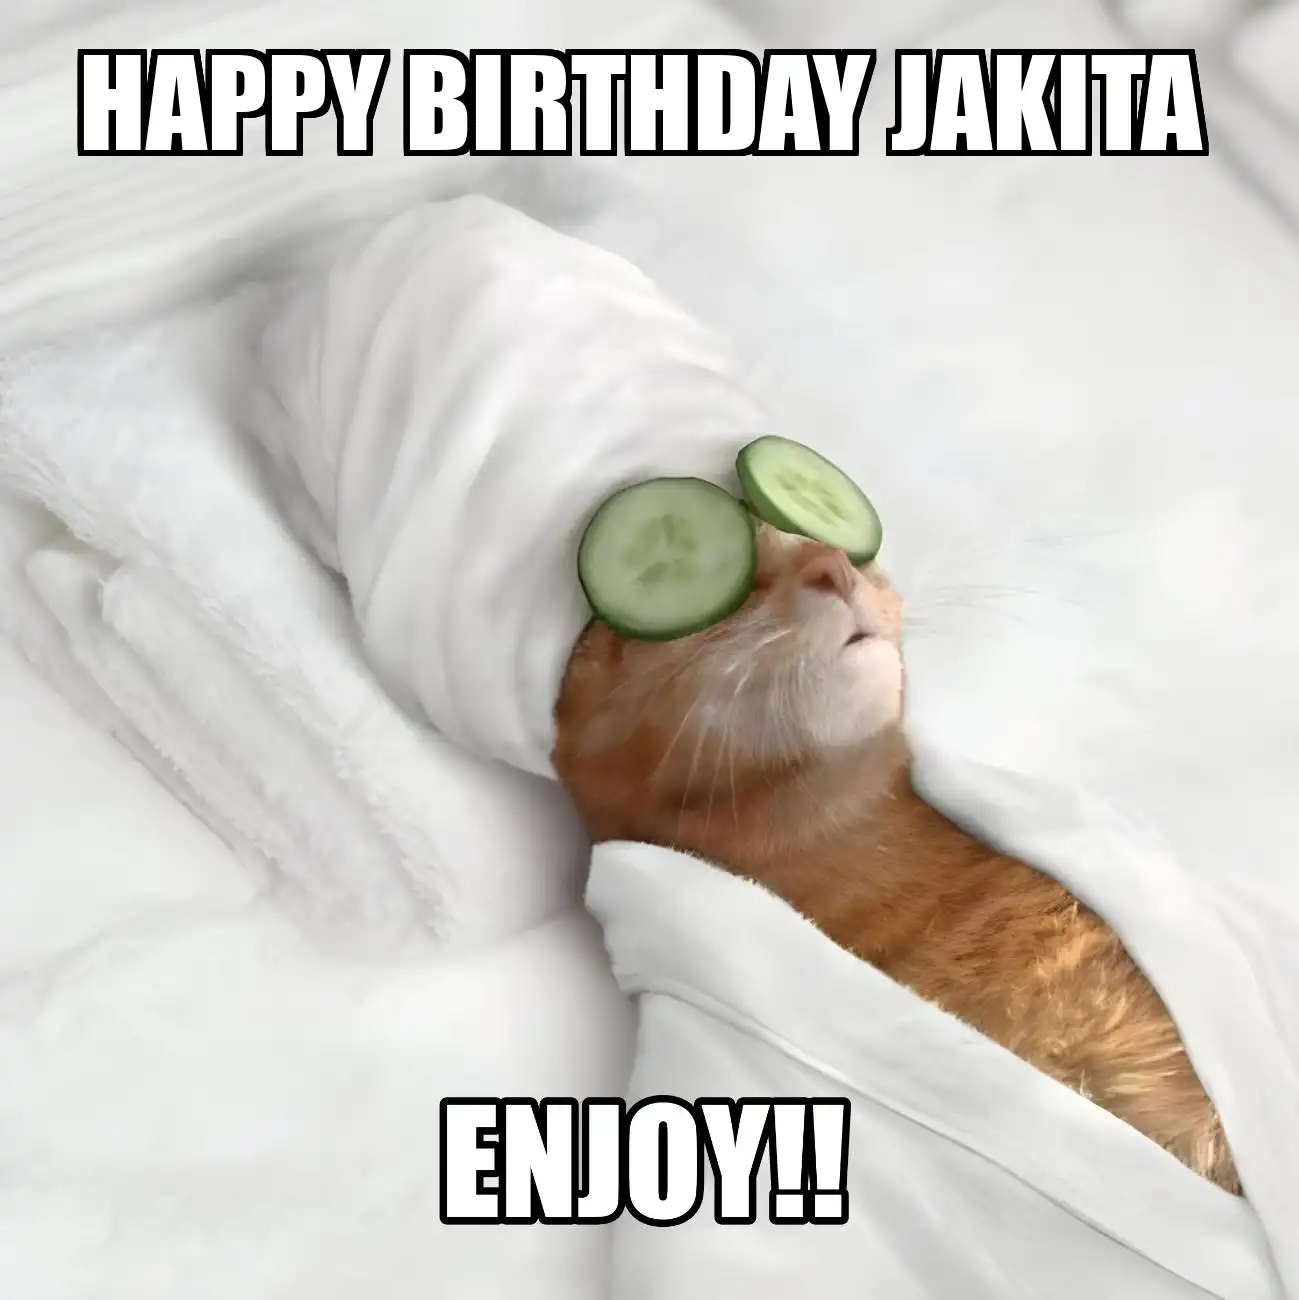 Happy Birthday Jakita Enjoy Cat Meme